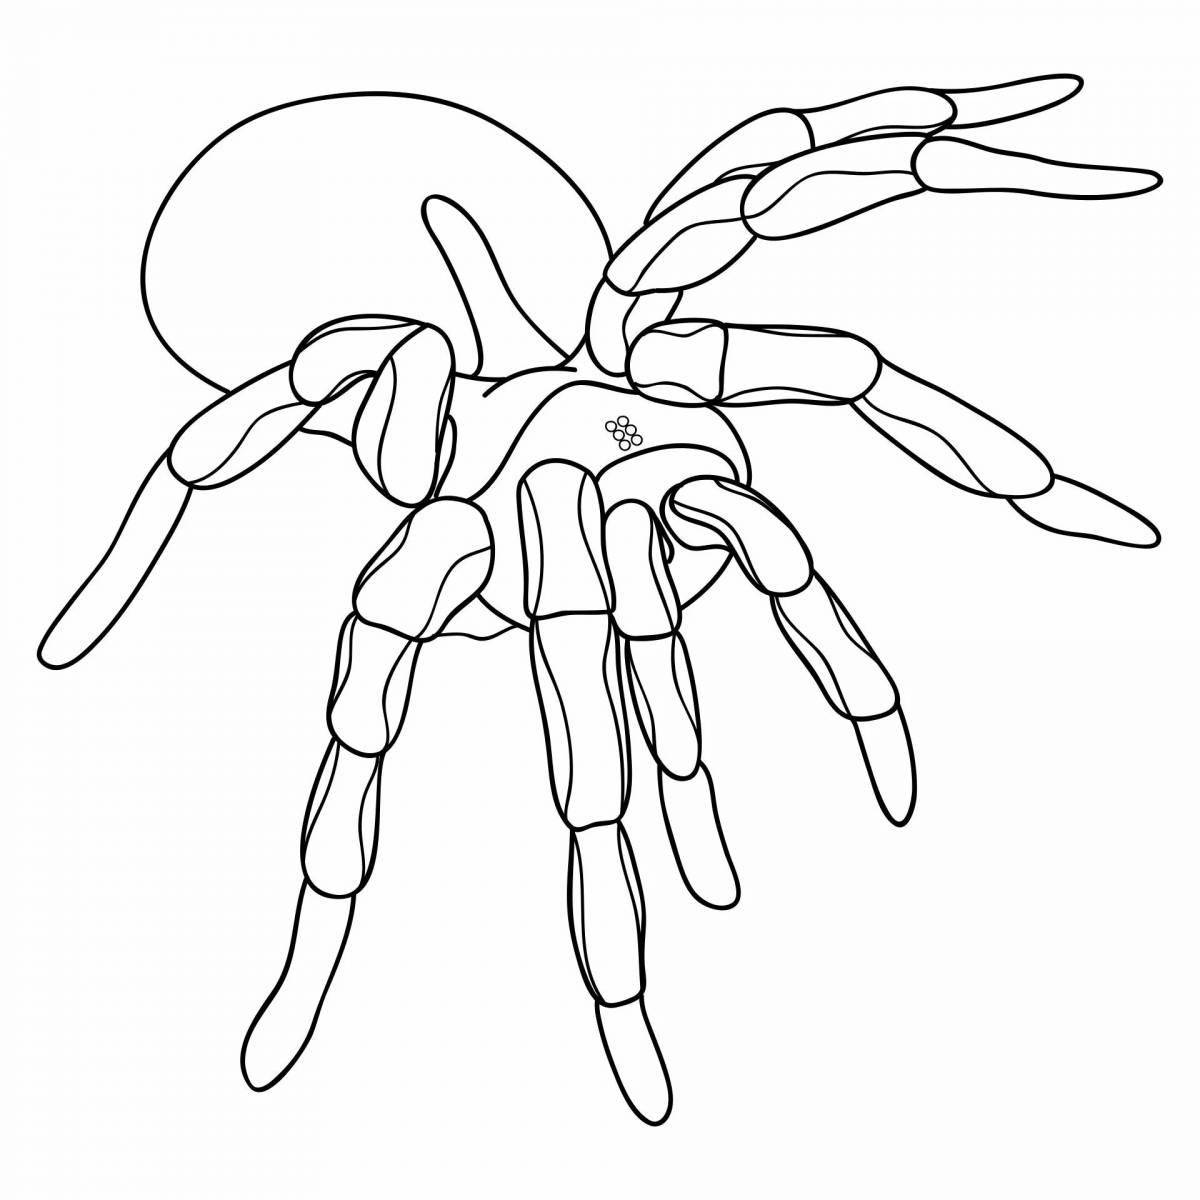 Mysterious spider tarantula coloring book